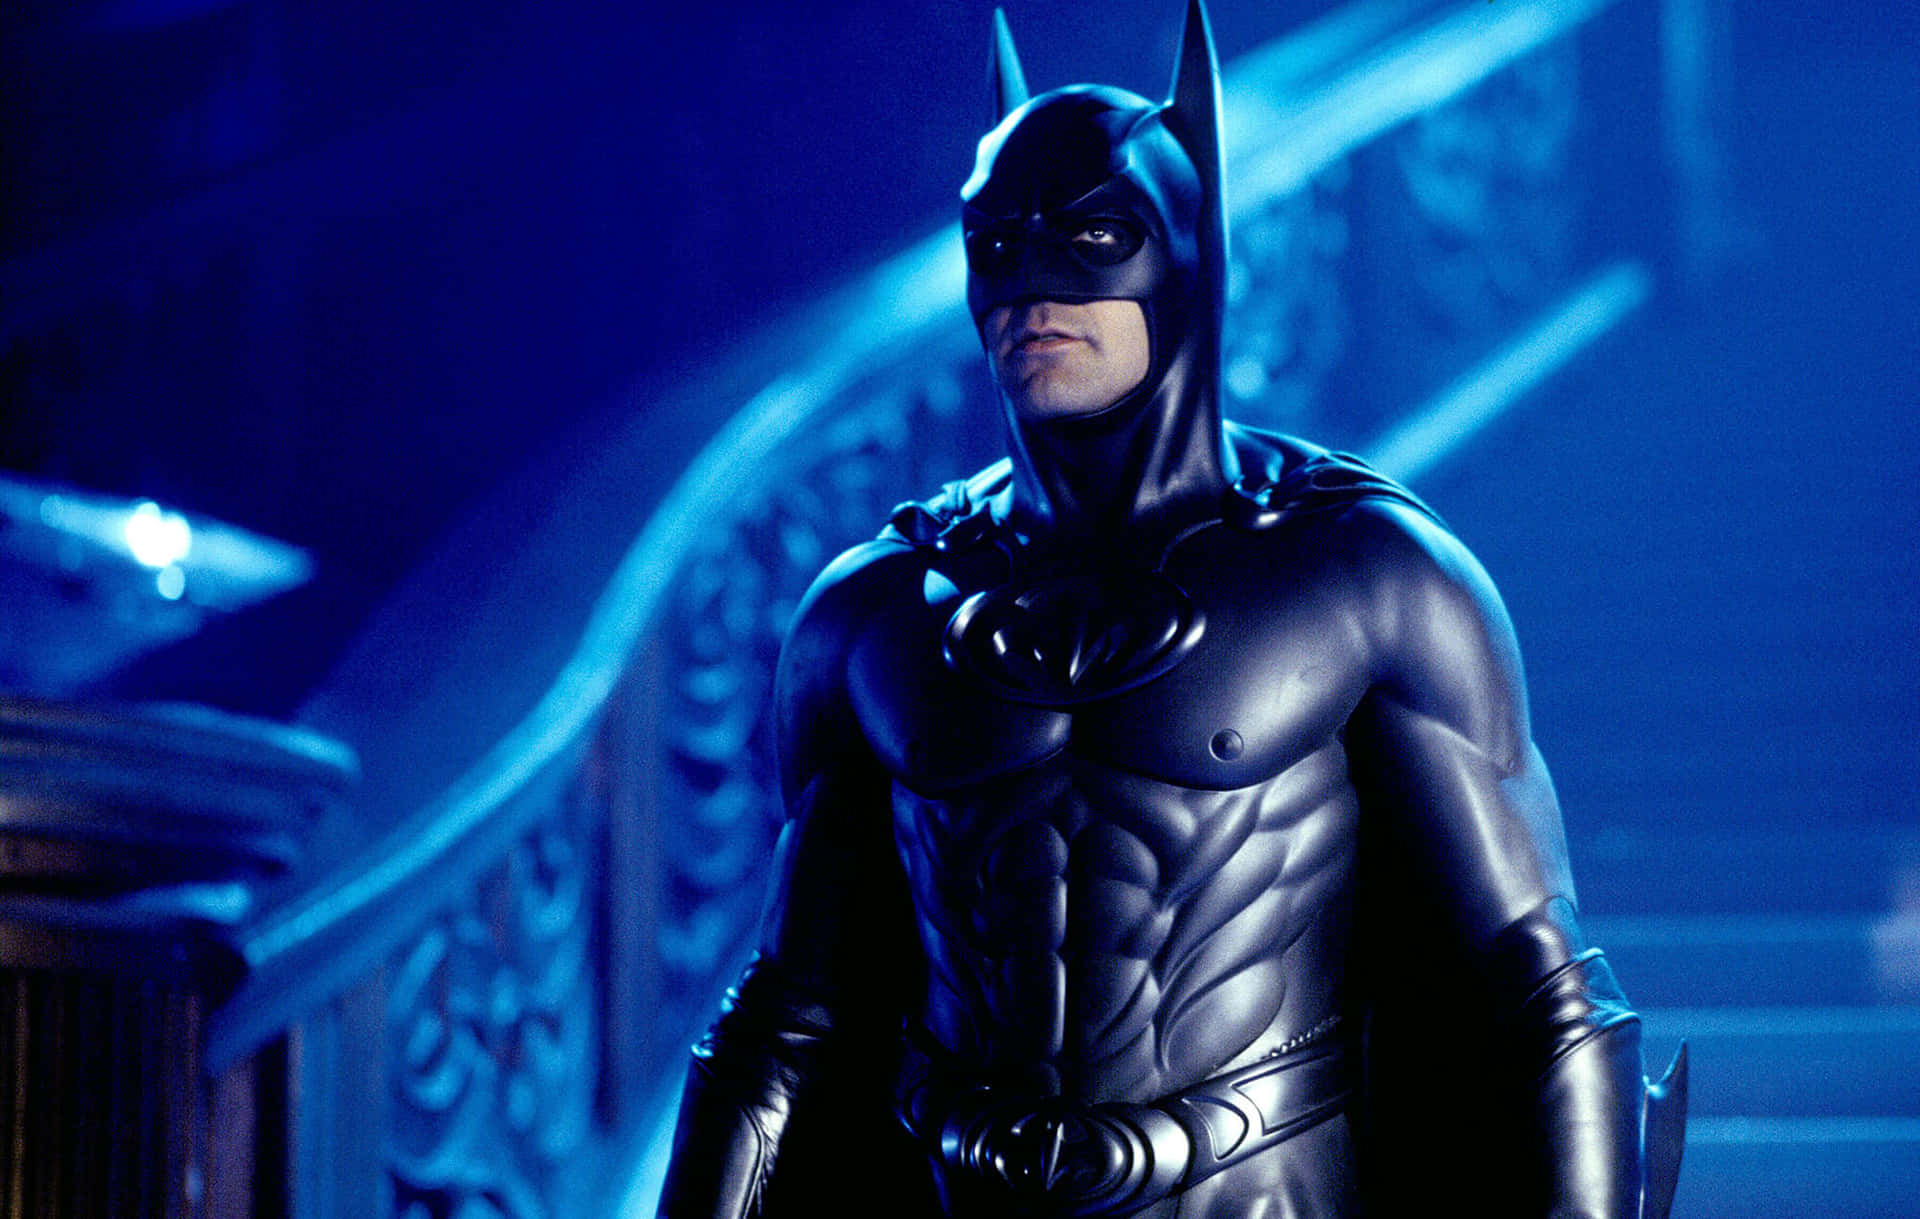 The Dark Knight Rises: Batman in his Bat-suit Wallpaper